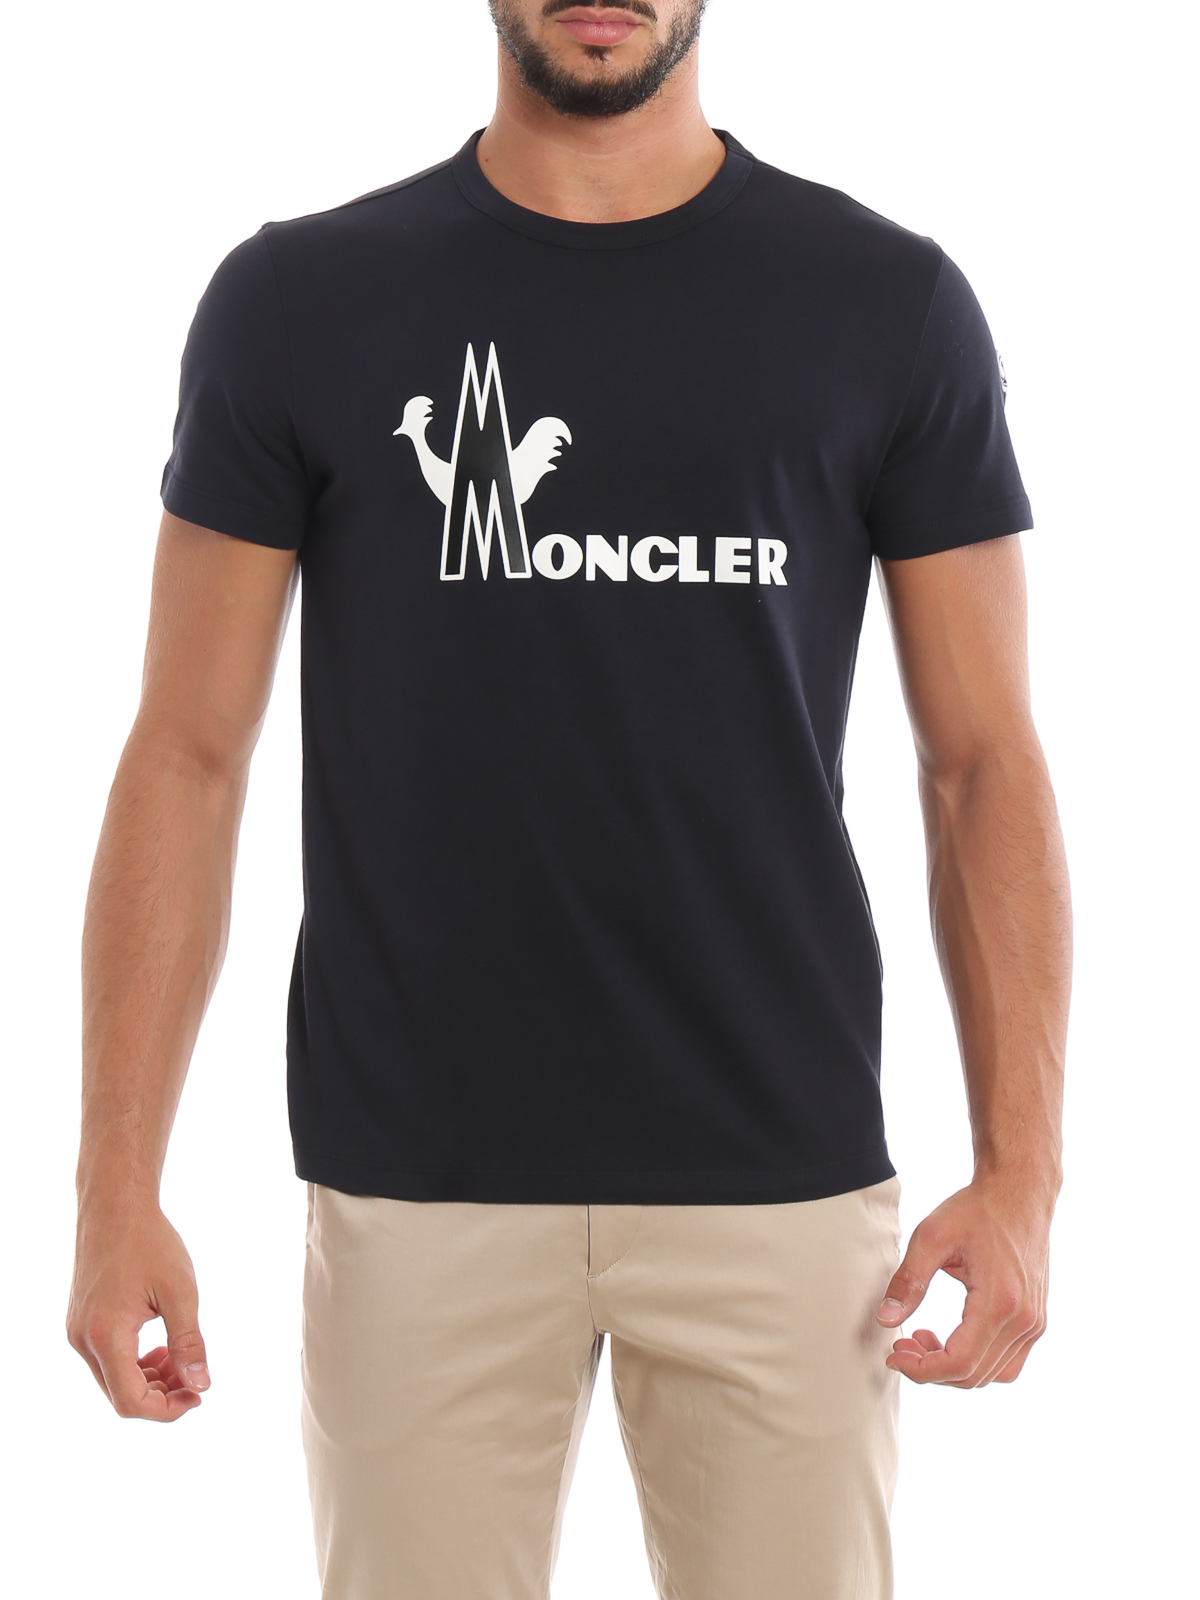 Moncler Logo Tee Top Sellers, 54% OFF | campingcanyelles.com